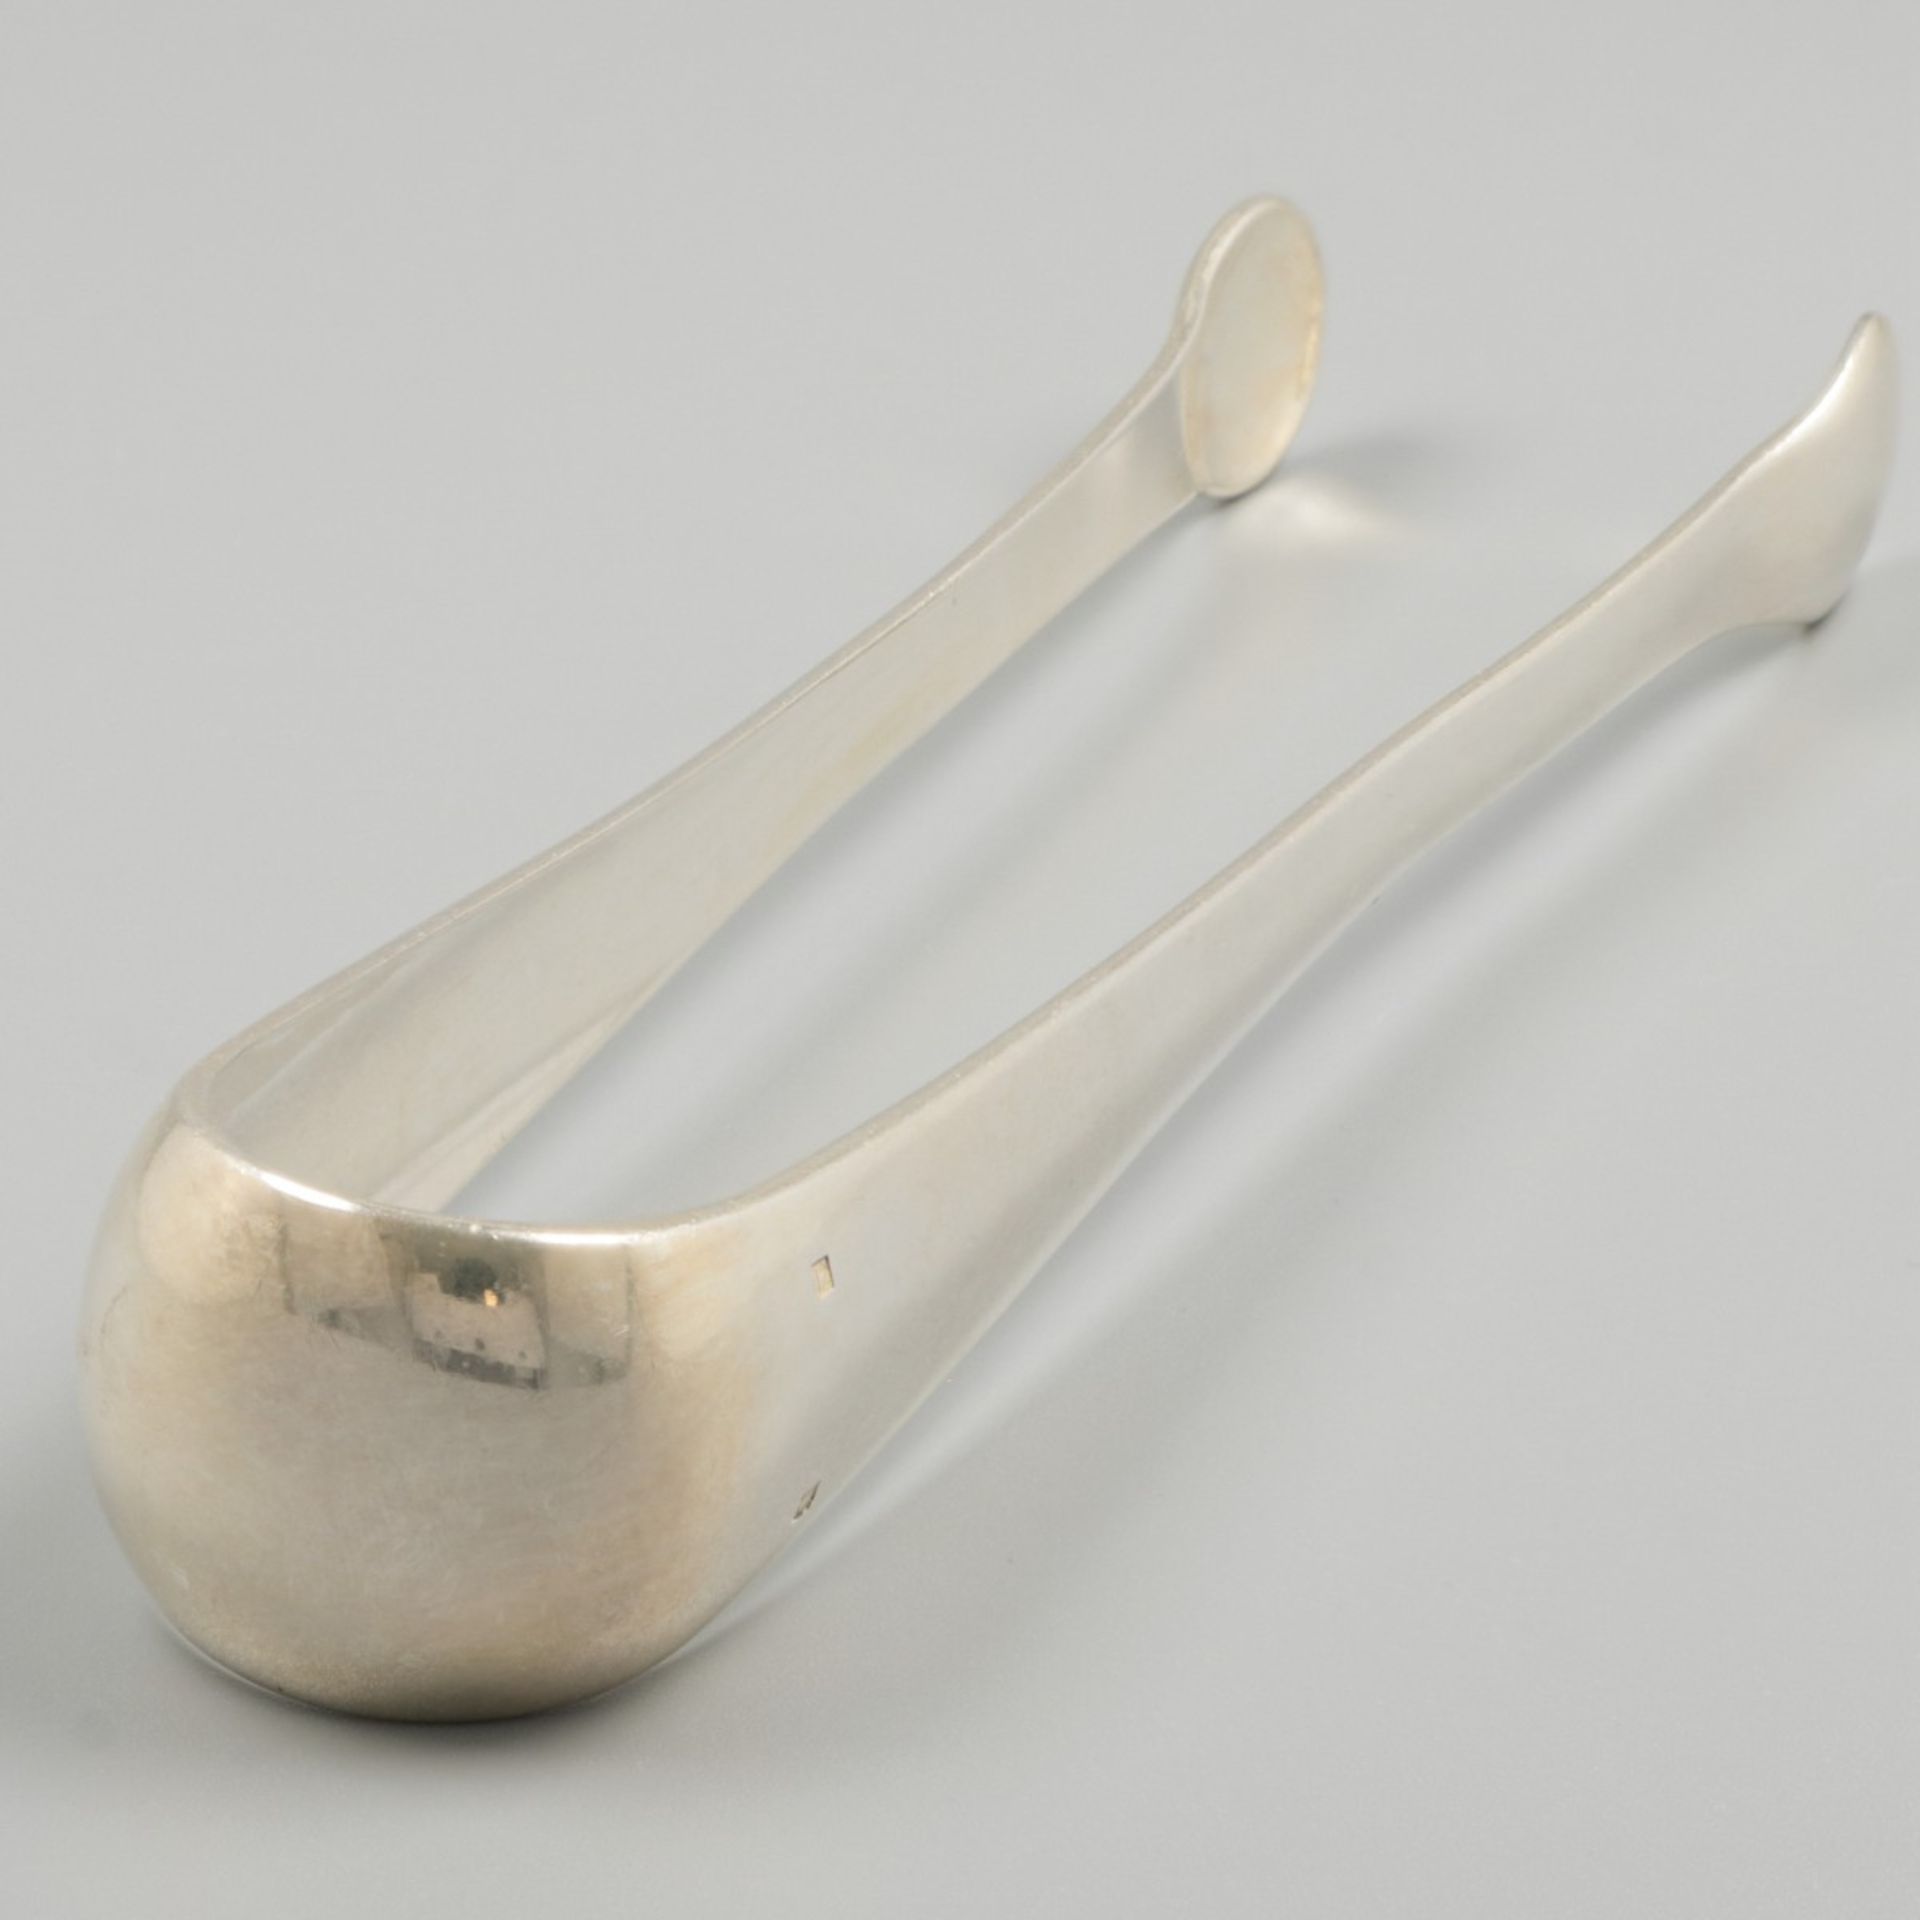 Sugar tongs (Gallia L'Alfenide) silver plated. - Image 3 of 5